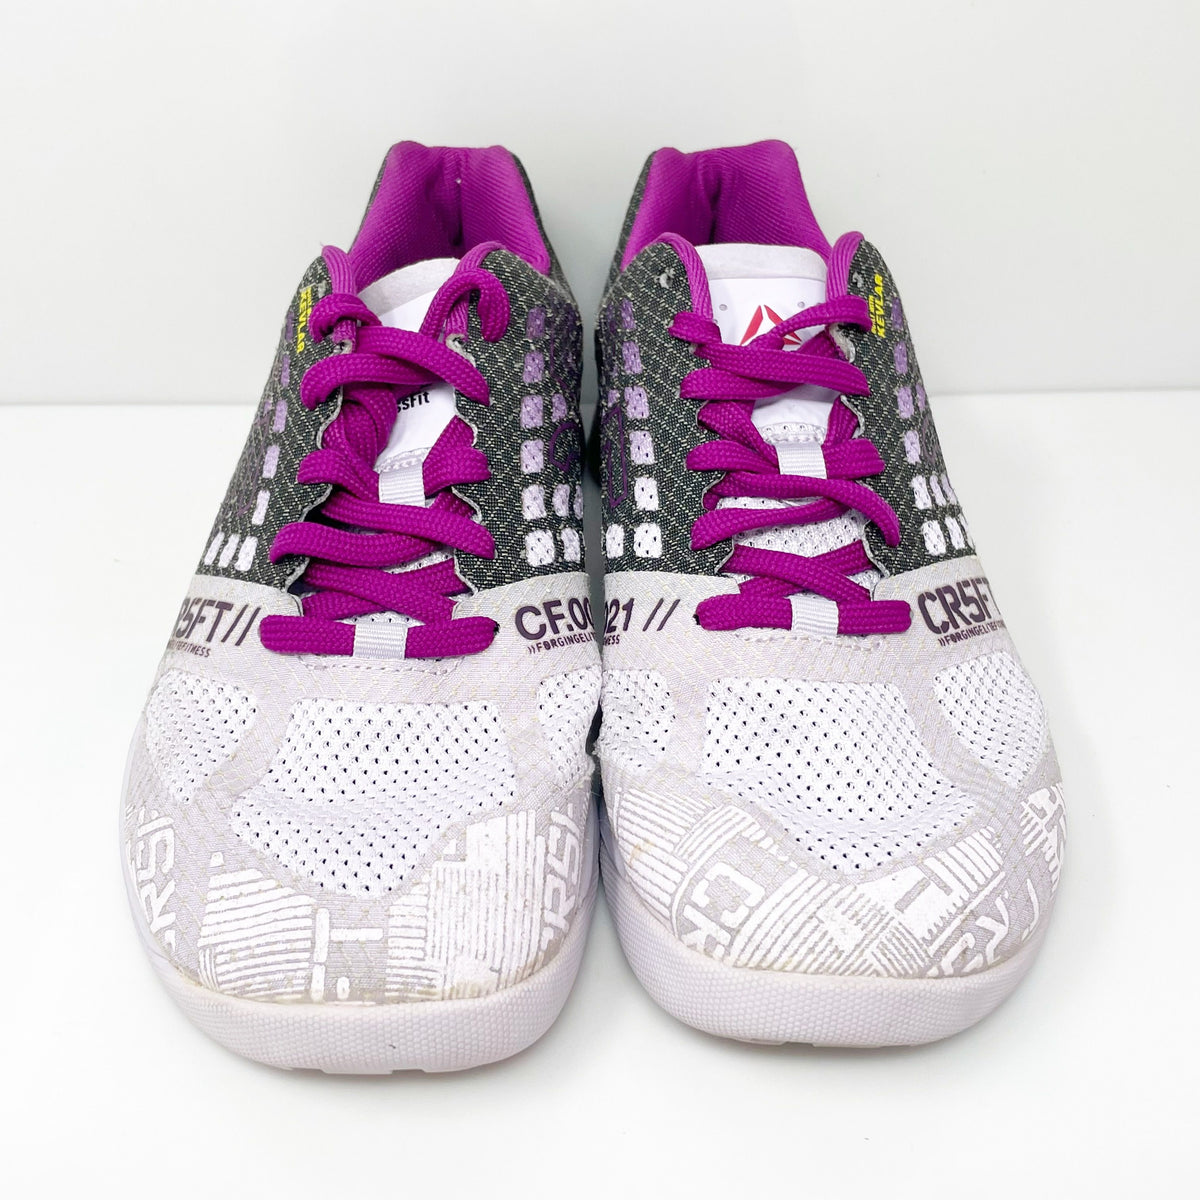 Reebok Womens Crossfit Nano 5.0 M49798 Pink Running Shoes Sneakers SneakerCycle